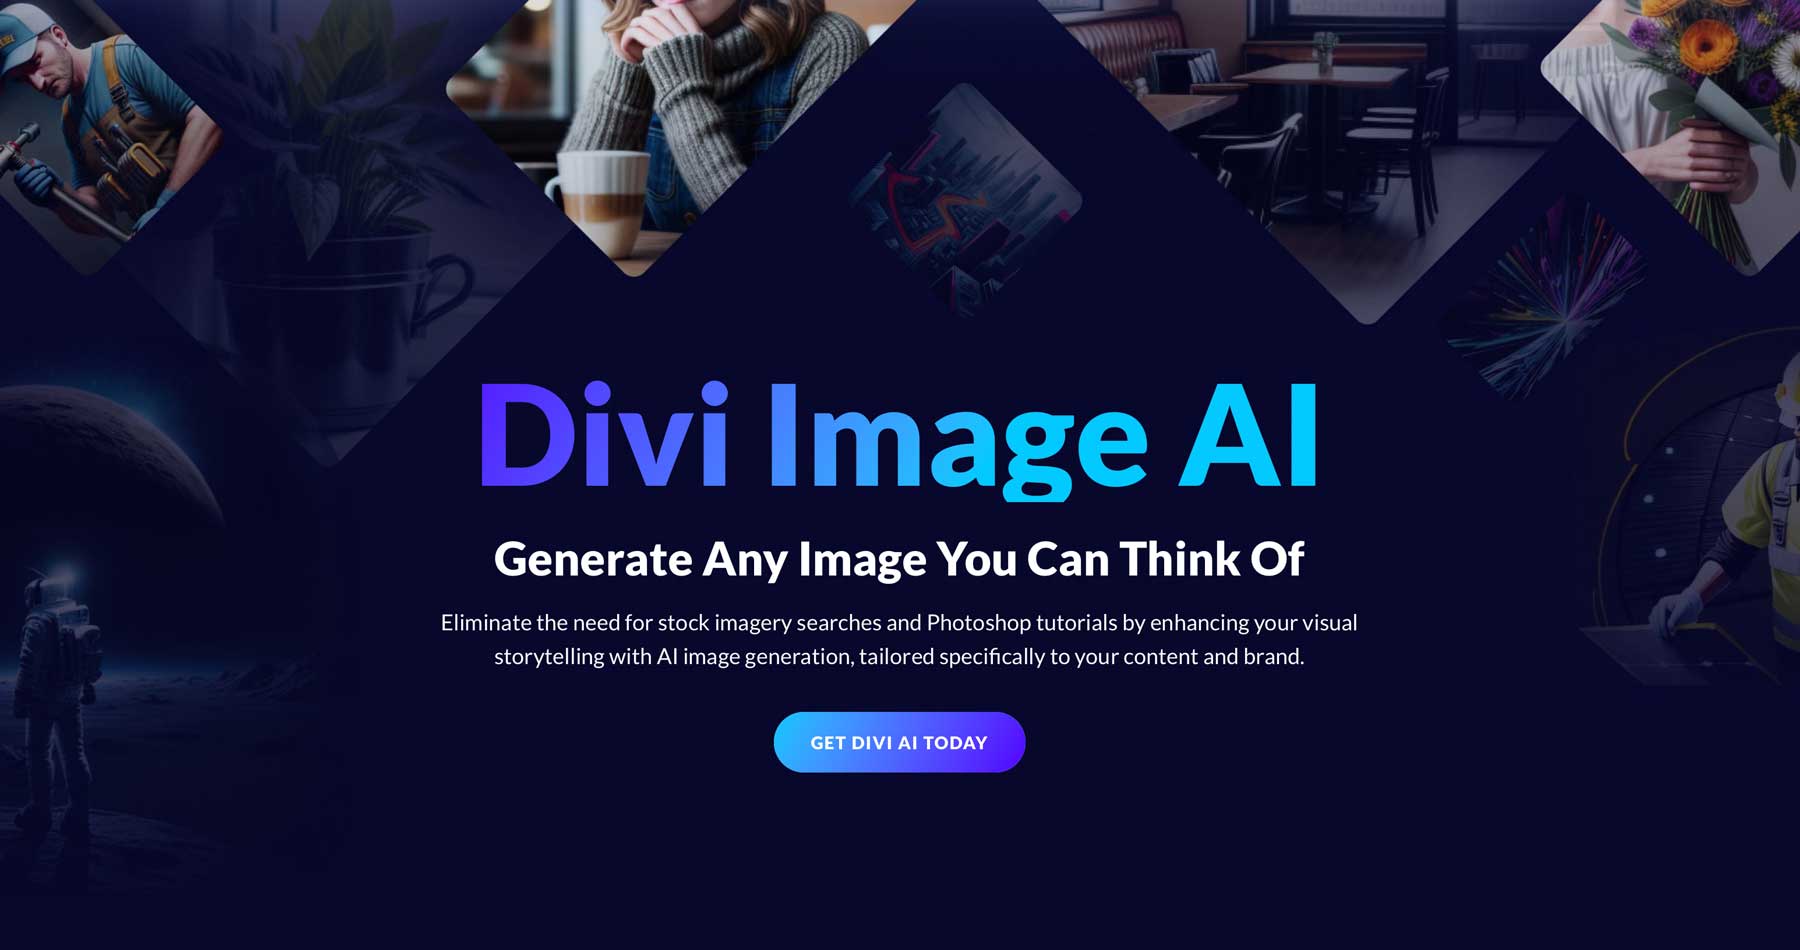 Divi Image AI